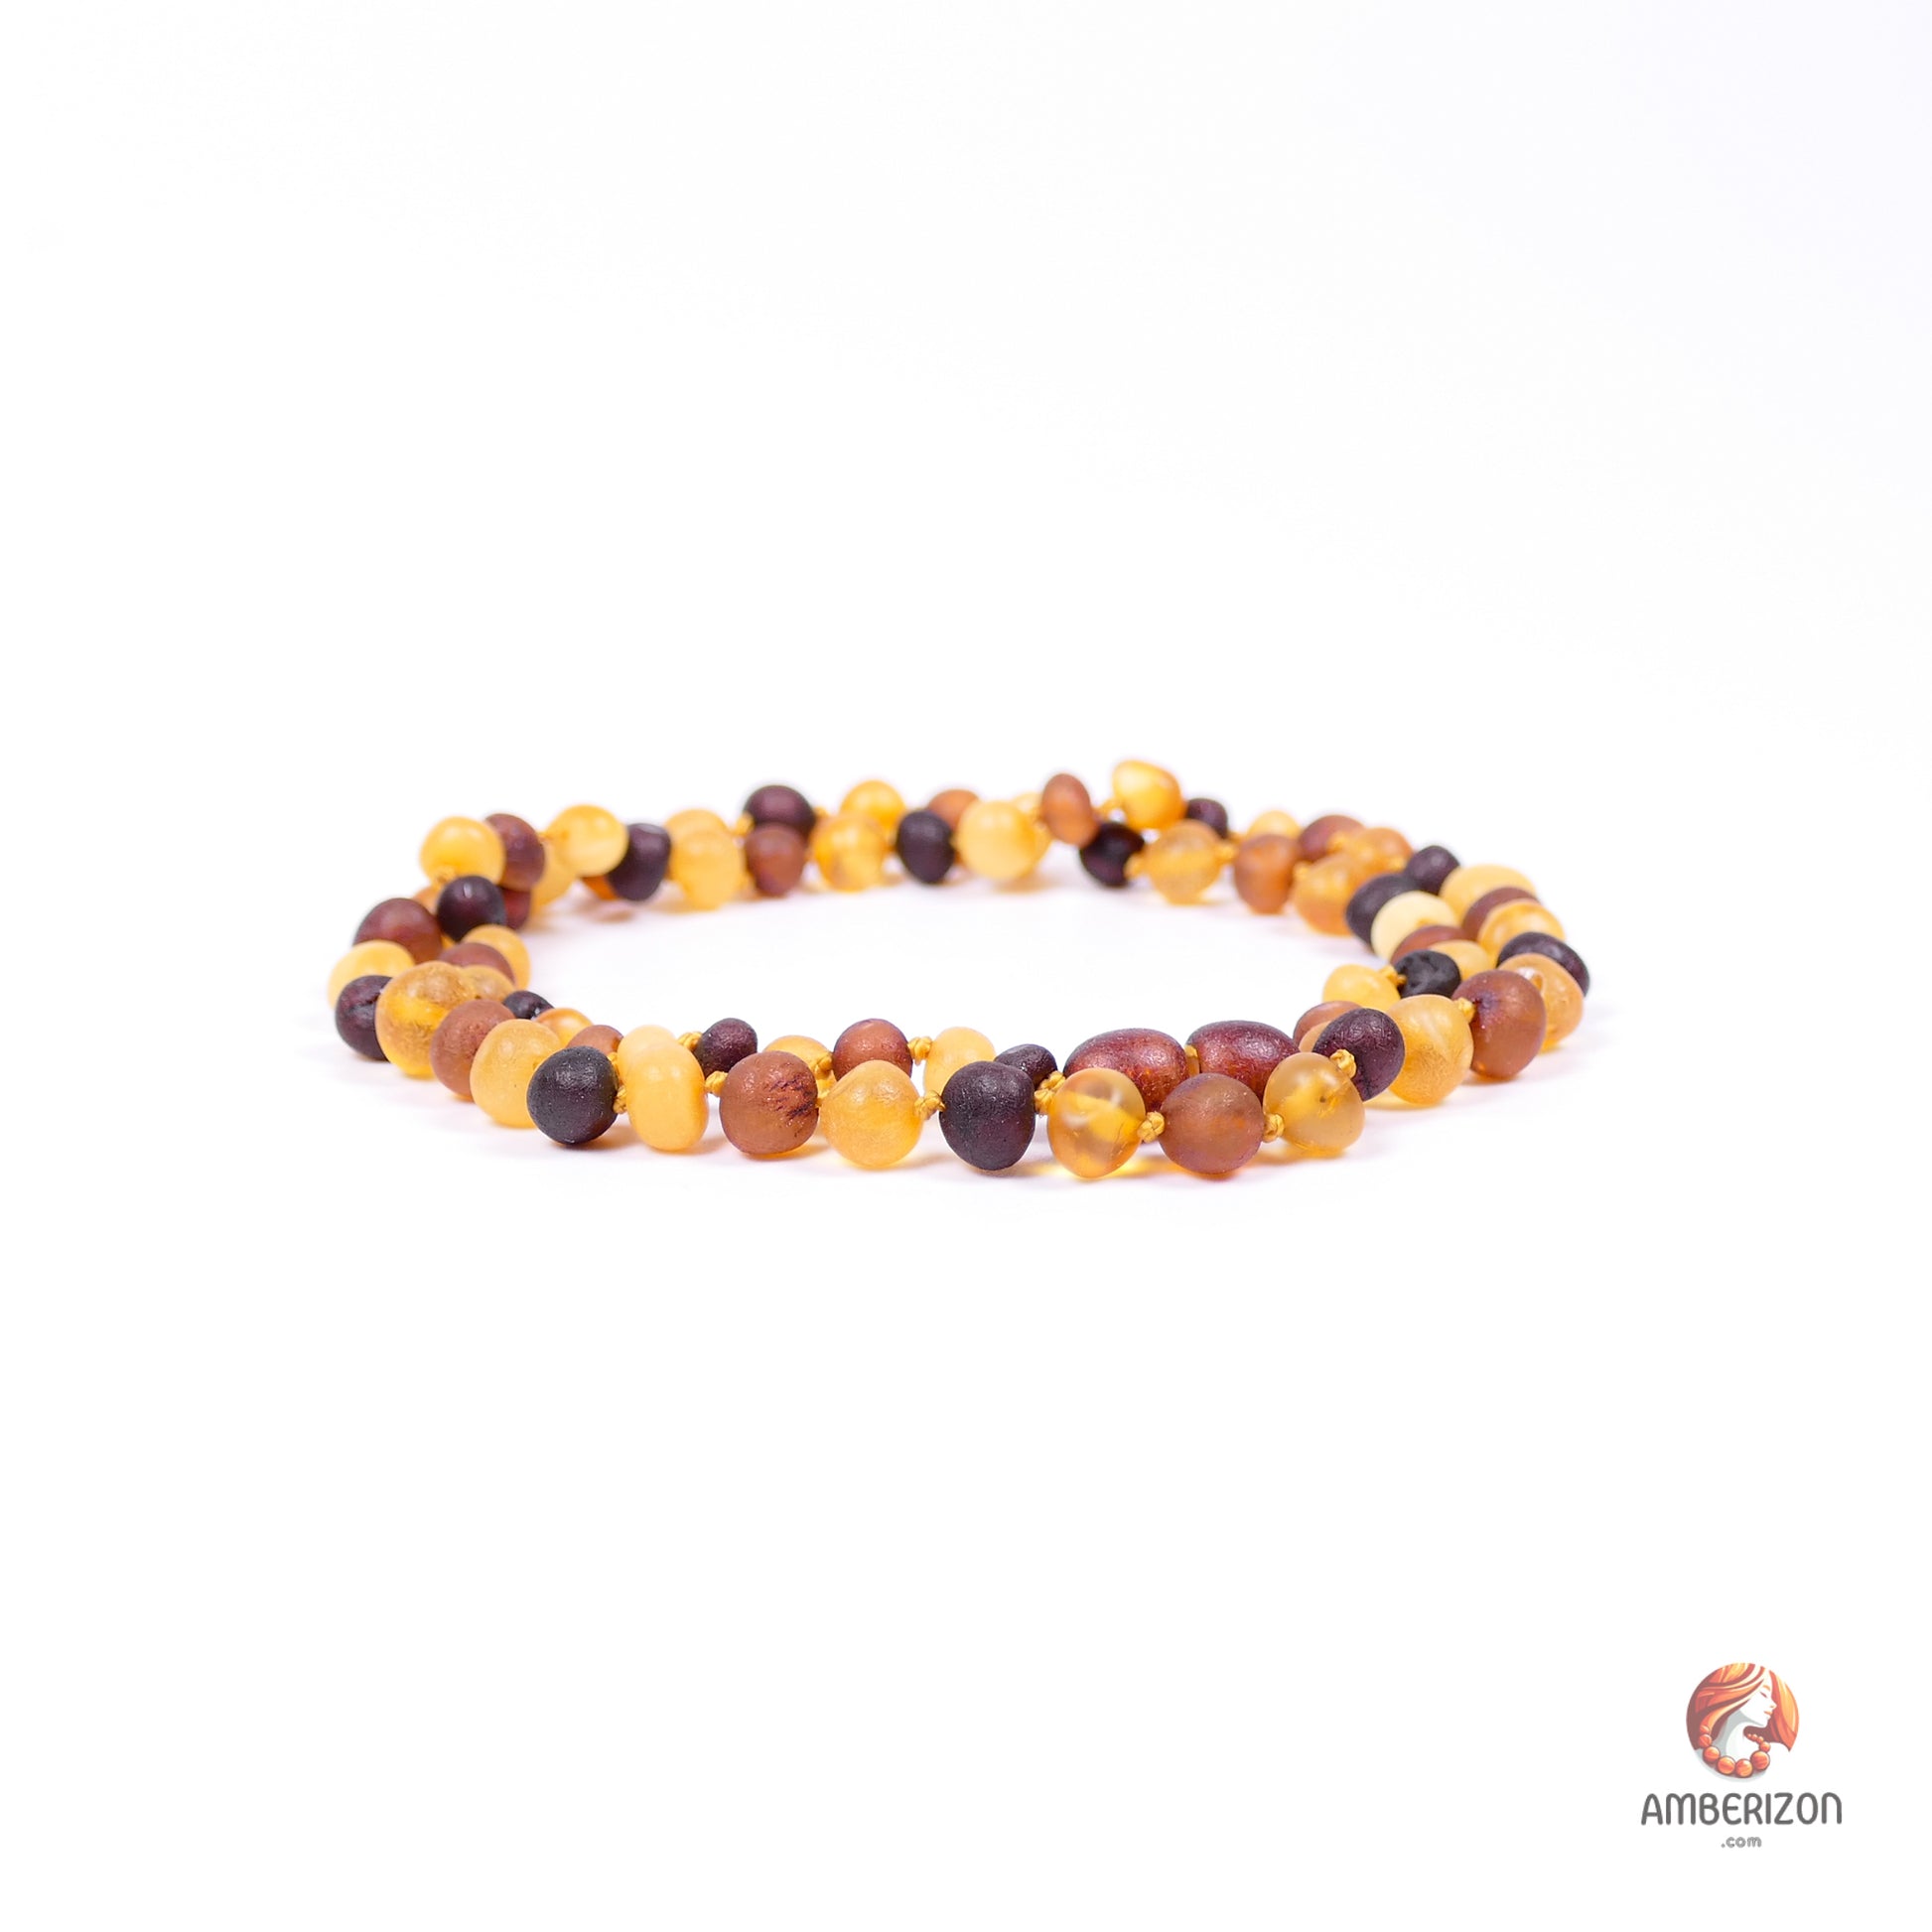 Multicolored minimalist women's necklace - Raw unpolished Baltic amber beads